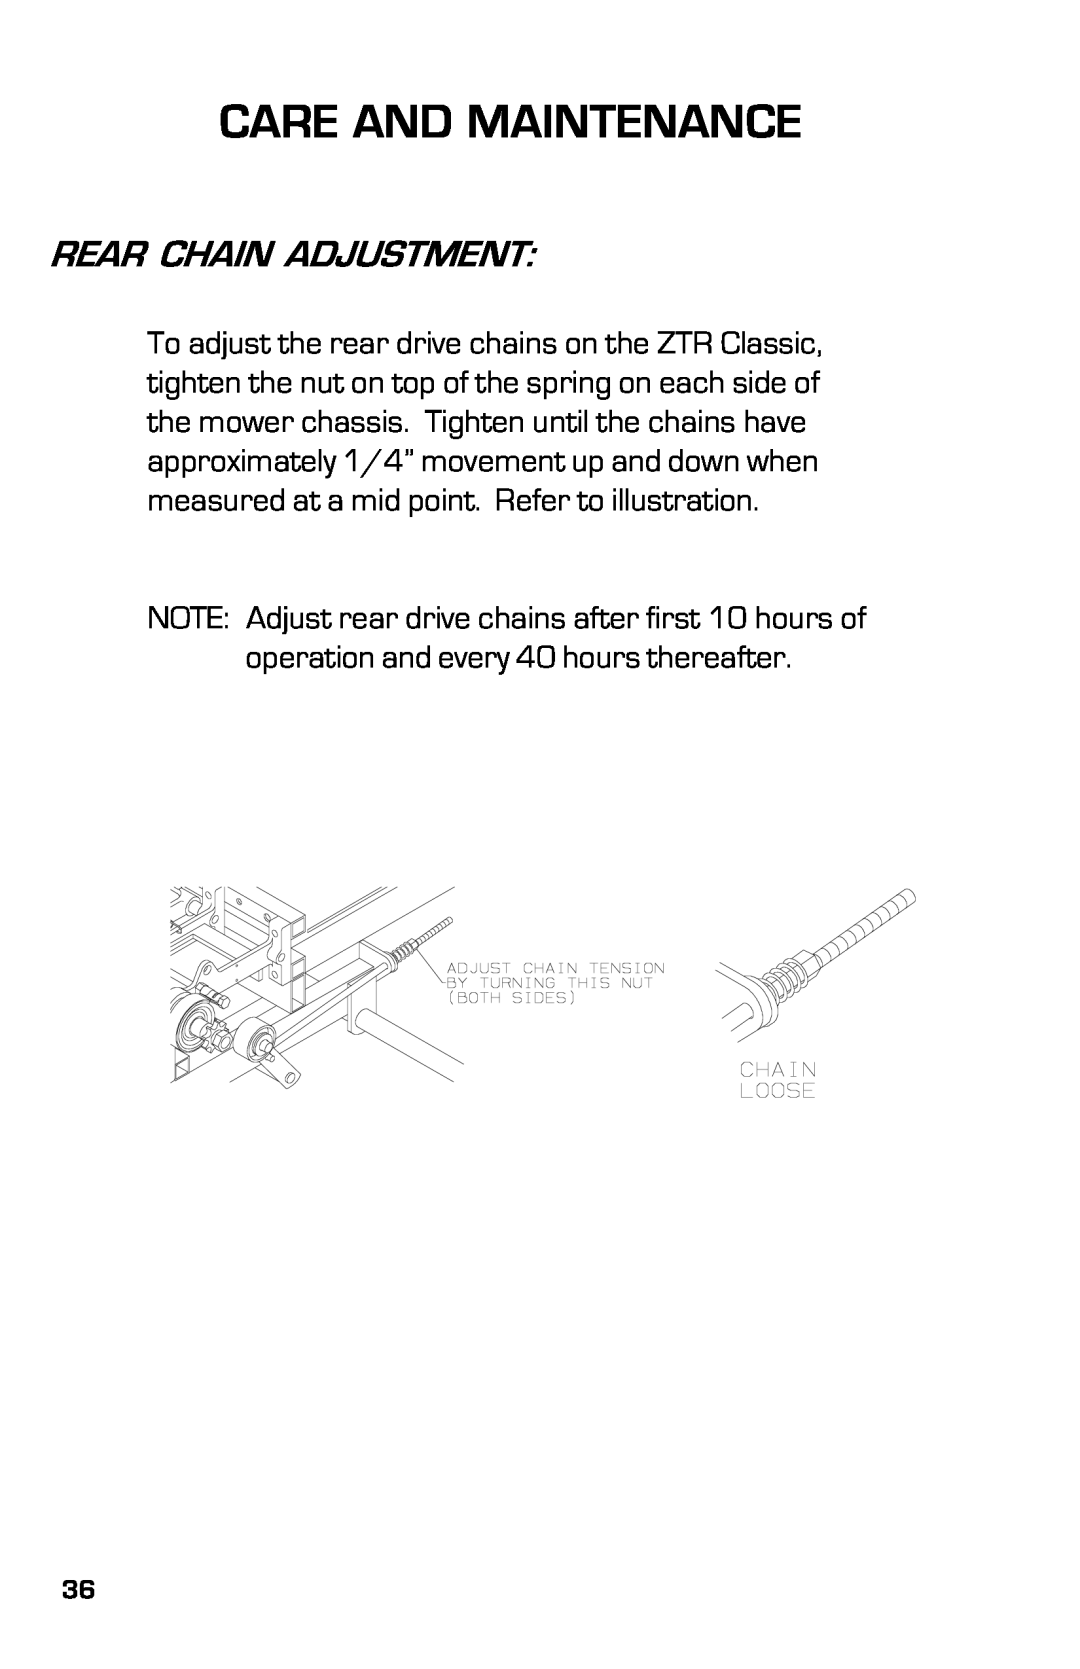 Dixon ZTRCLASSIC manual Rear Chain Adjustment, Care And Maintenance 